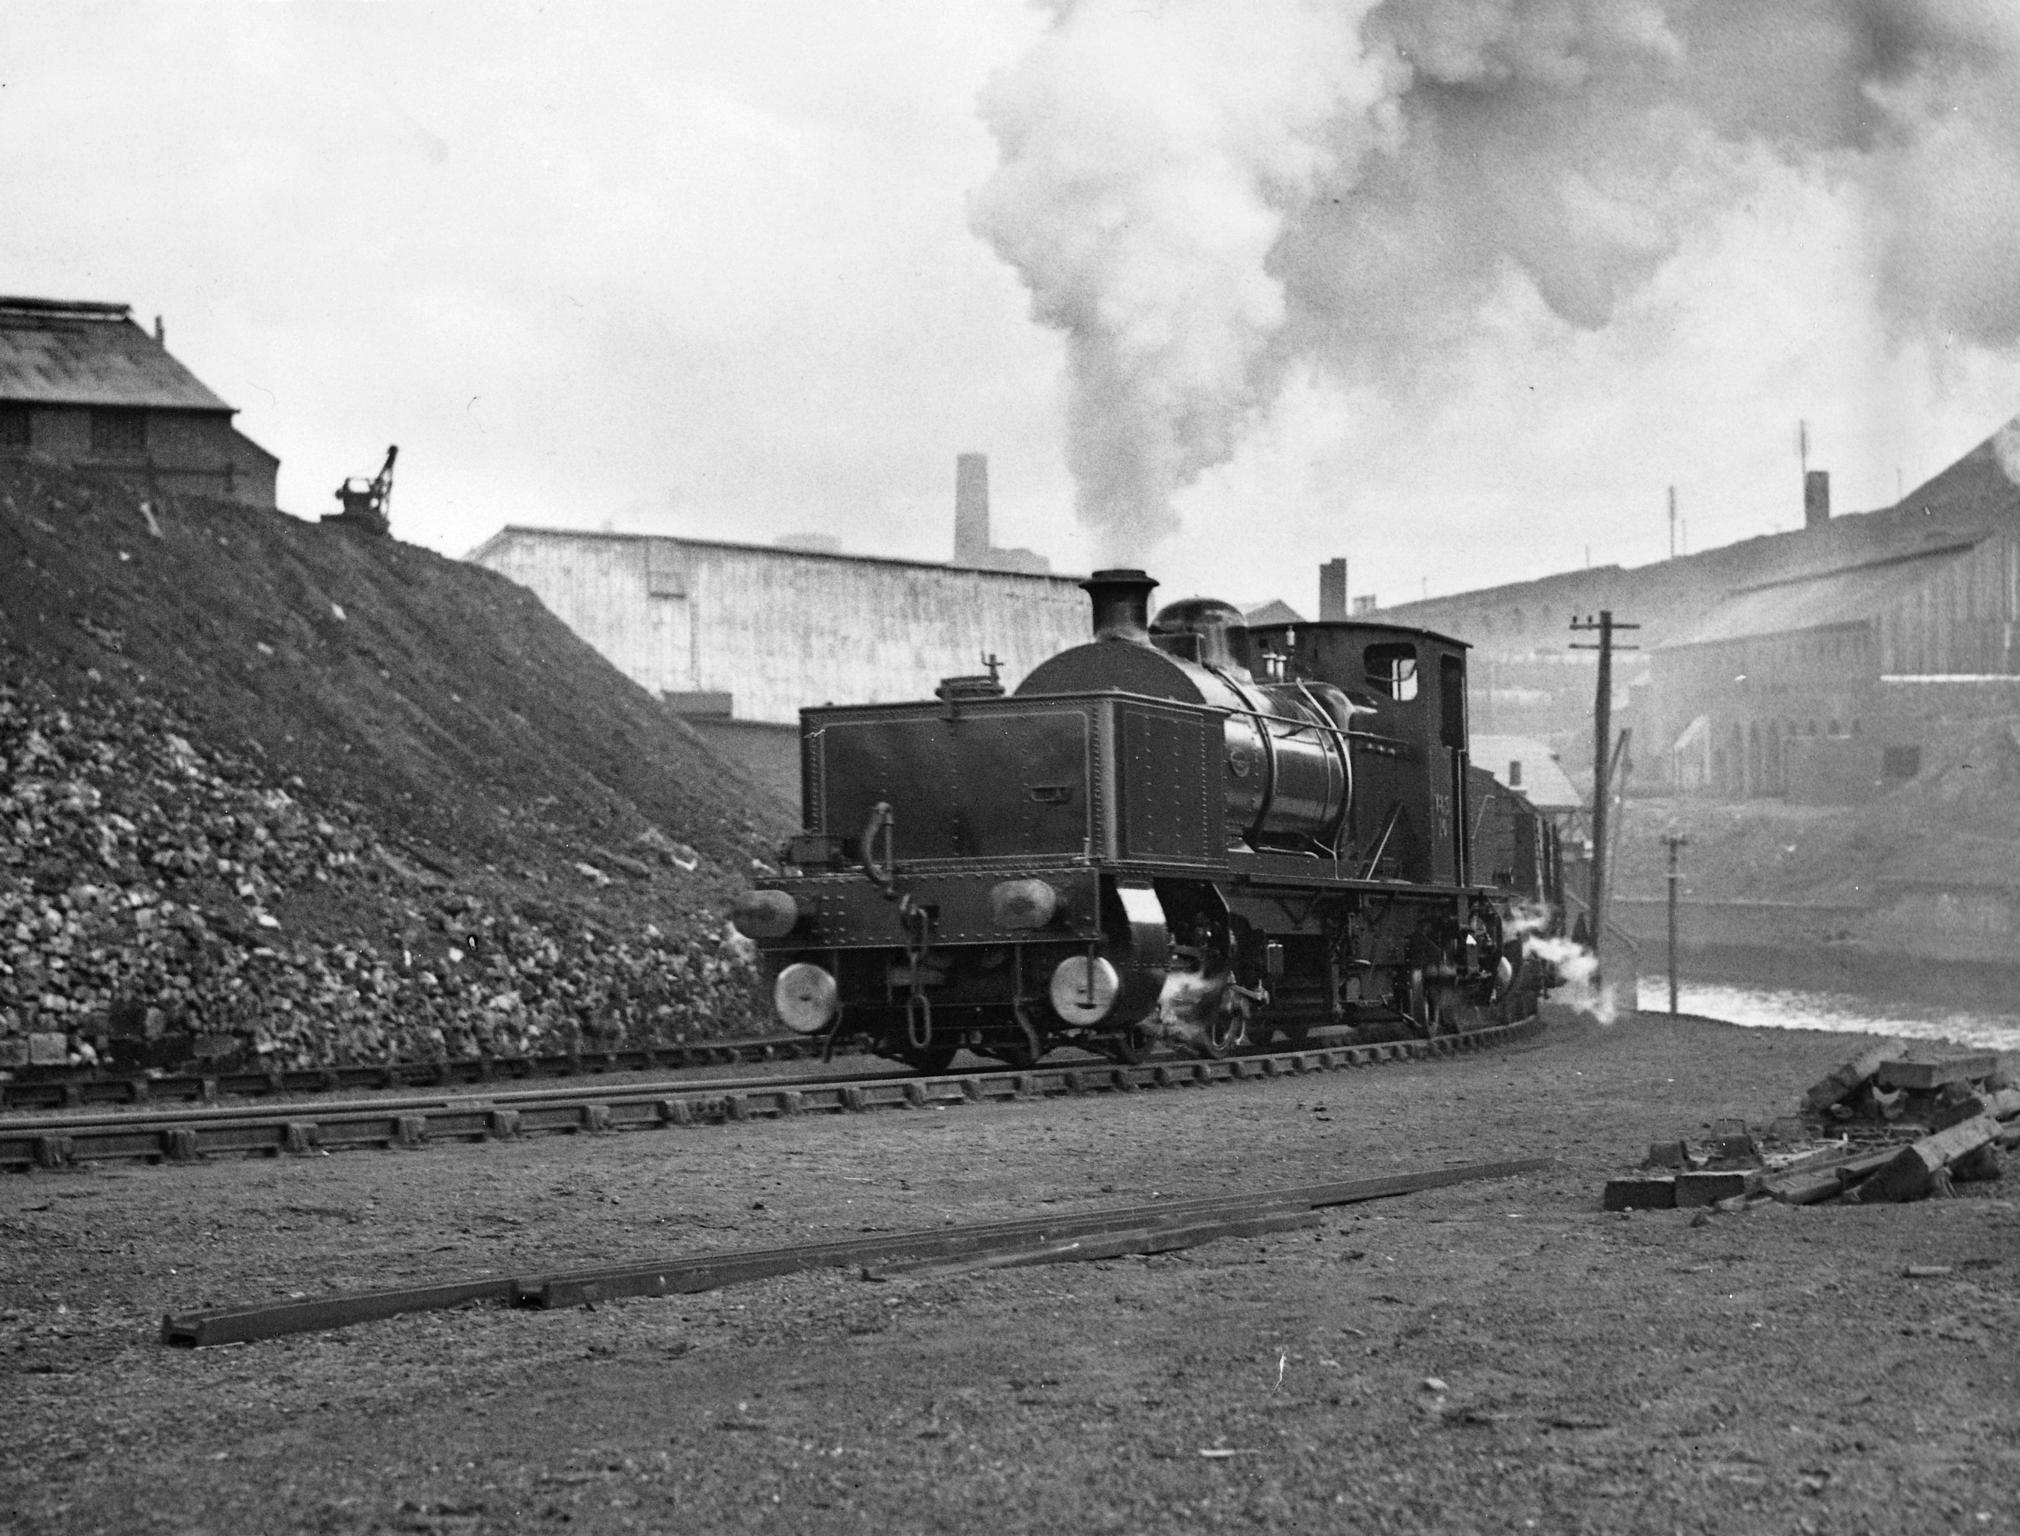 Garratt locomotive, photograph